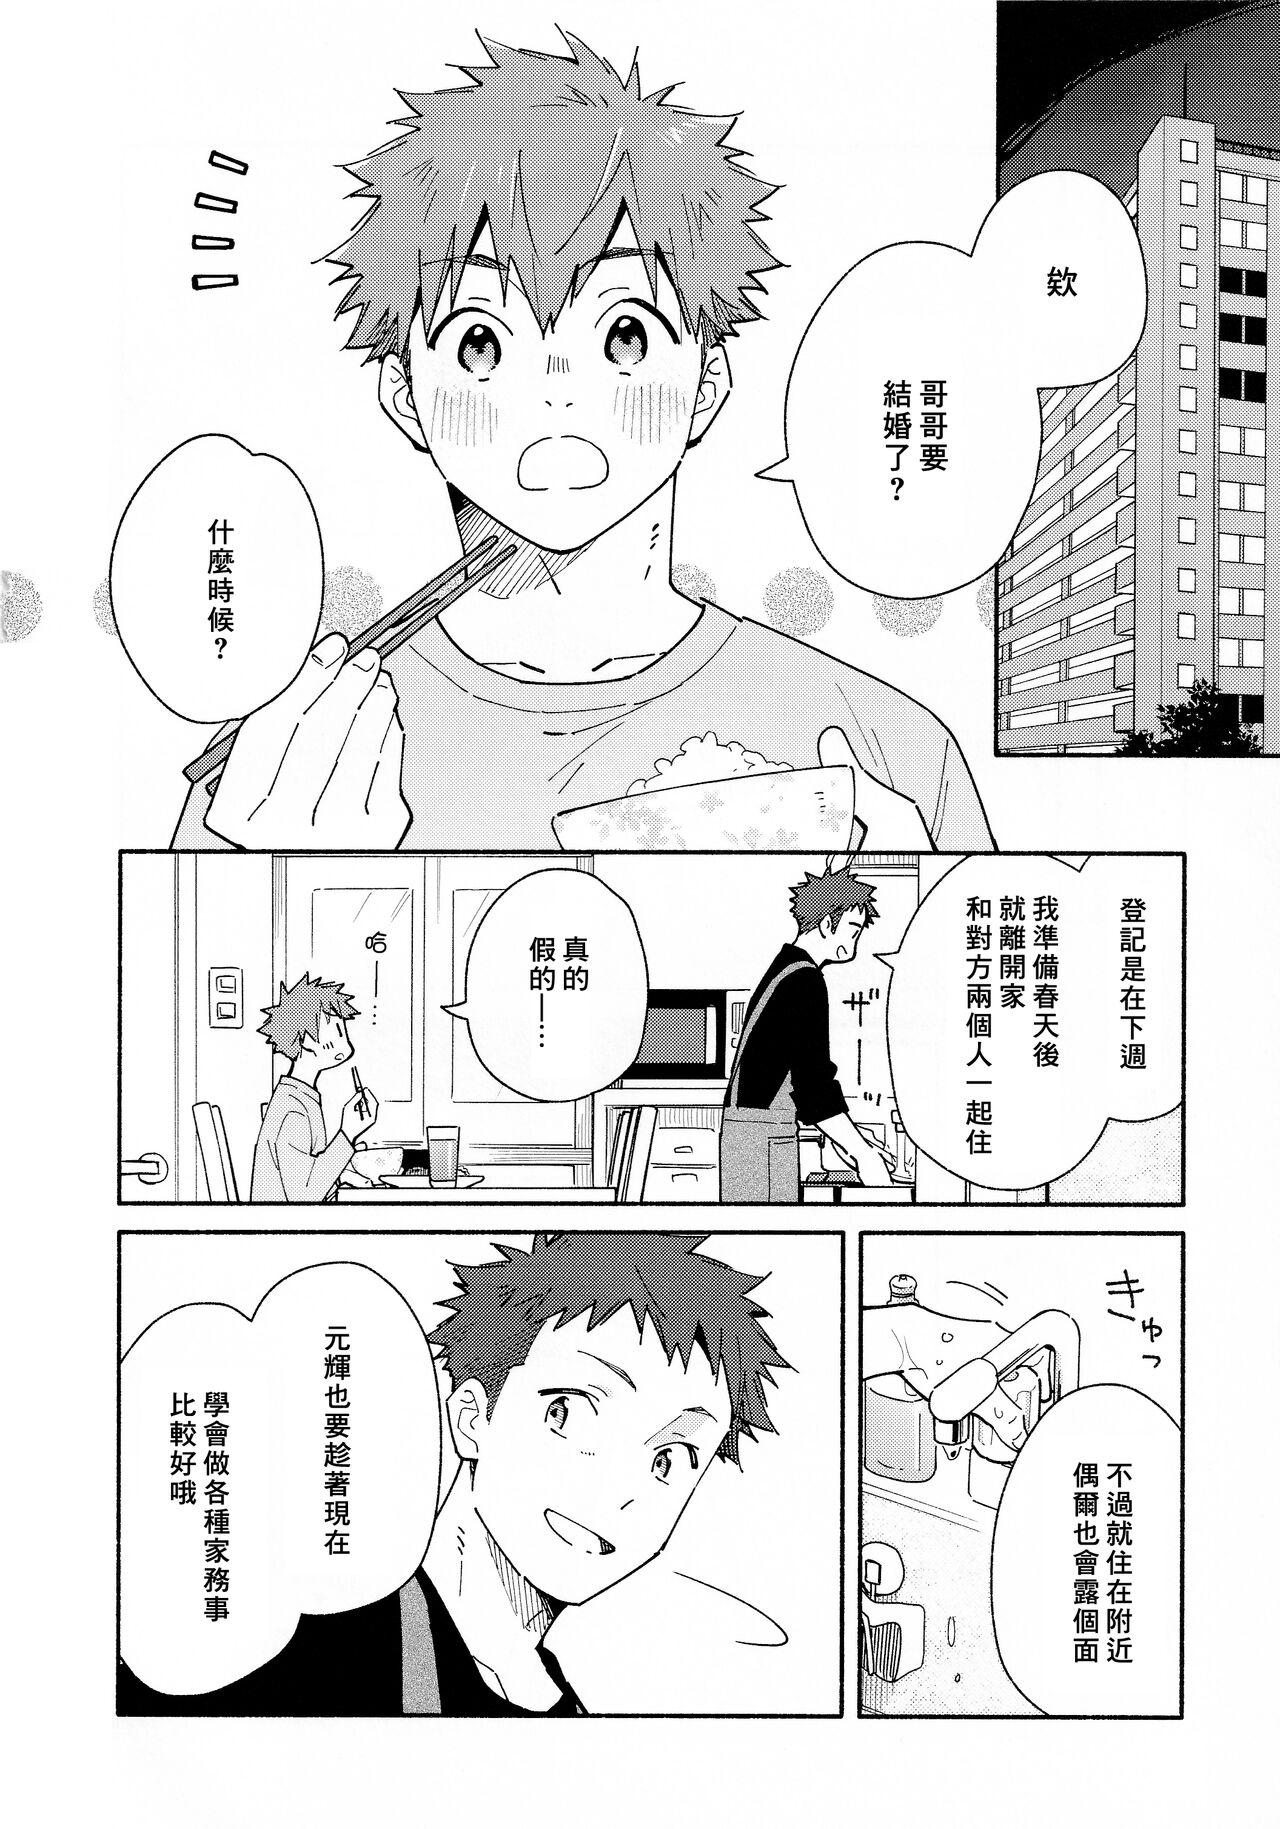 Cartoon 9 Tsuki no soreiyu CLEMENTINE | 9月的太阳 CLEMENTINE - Original Matures - Page 3